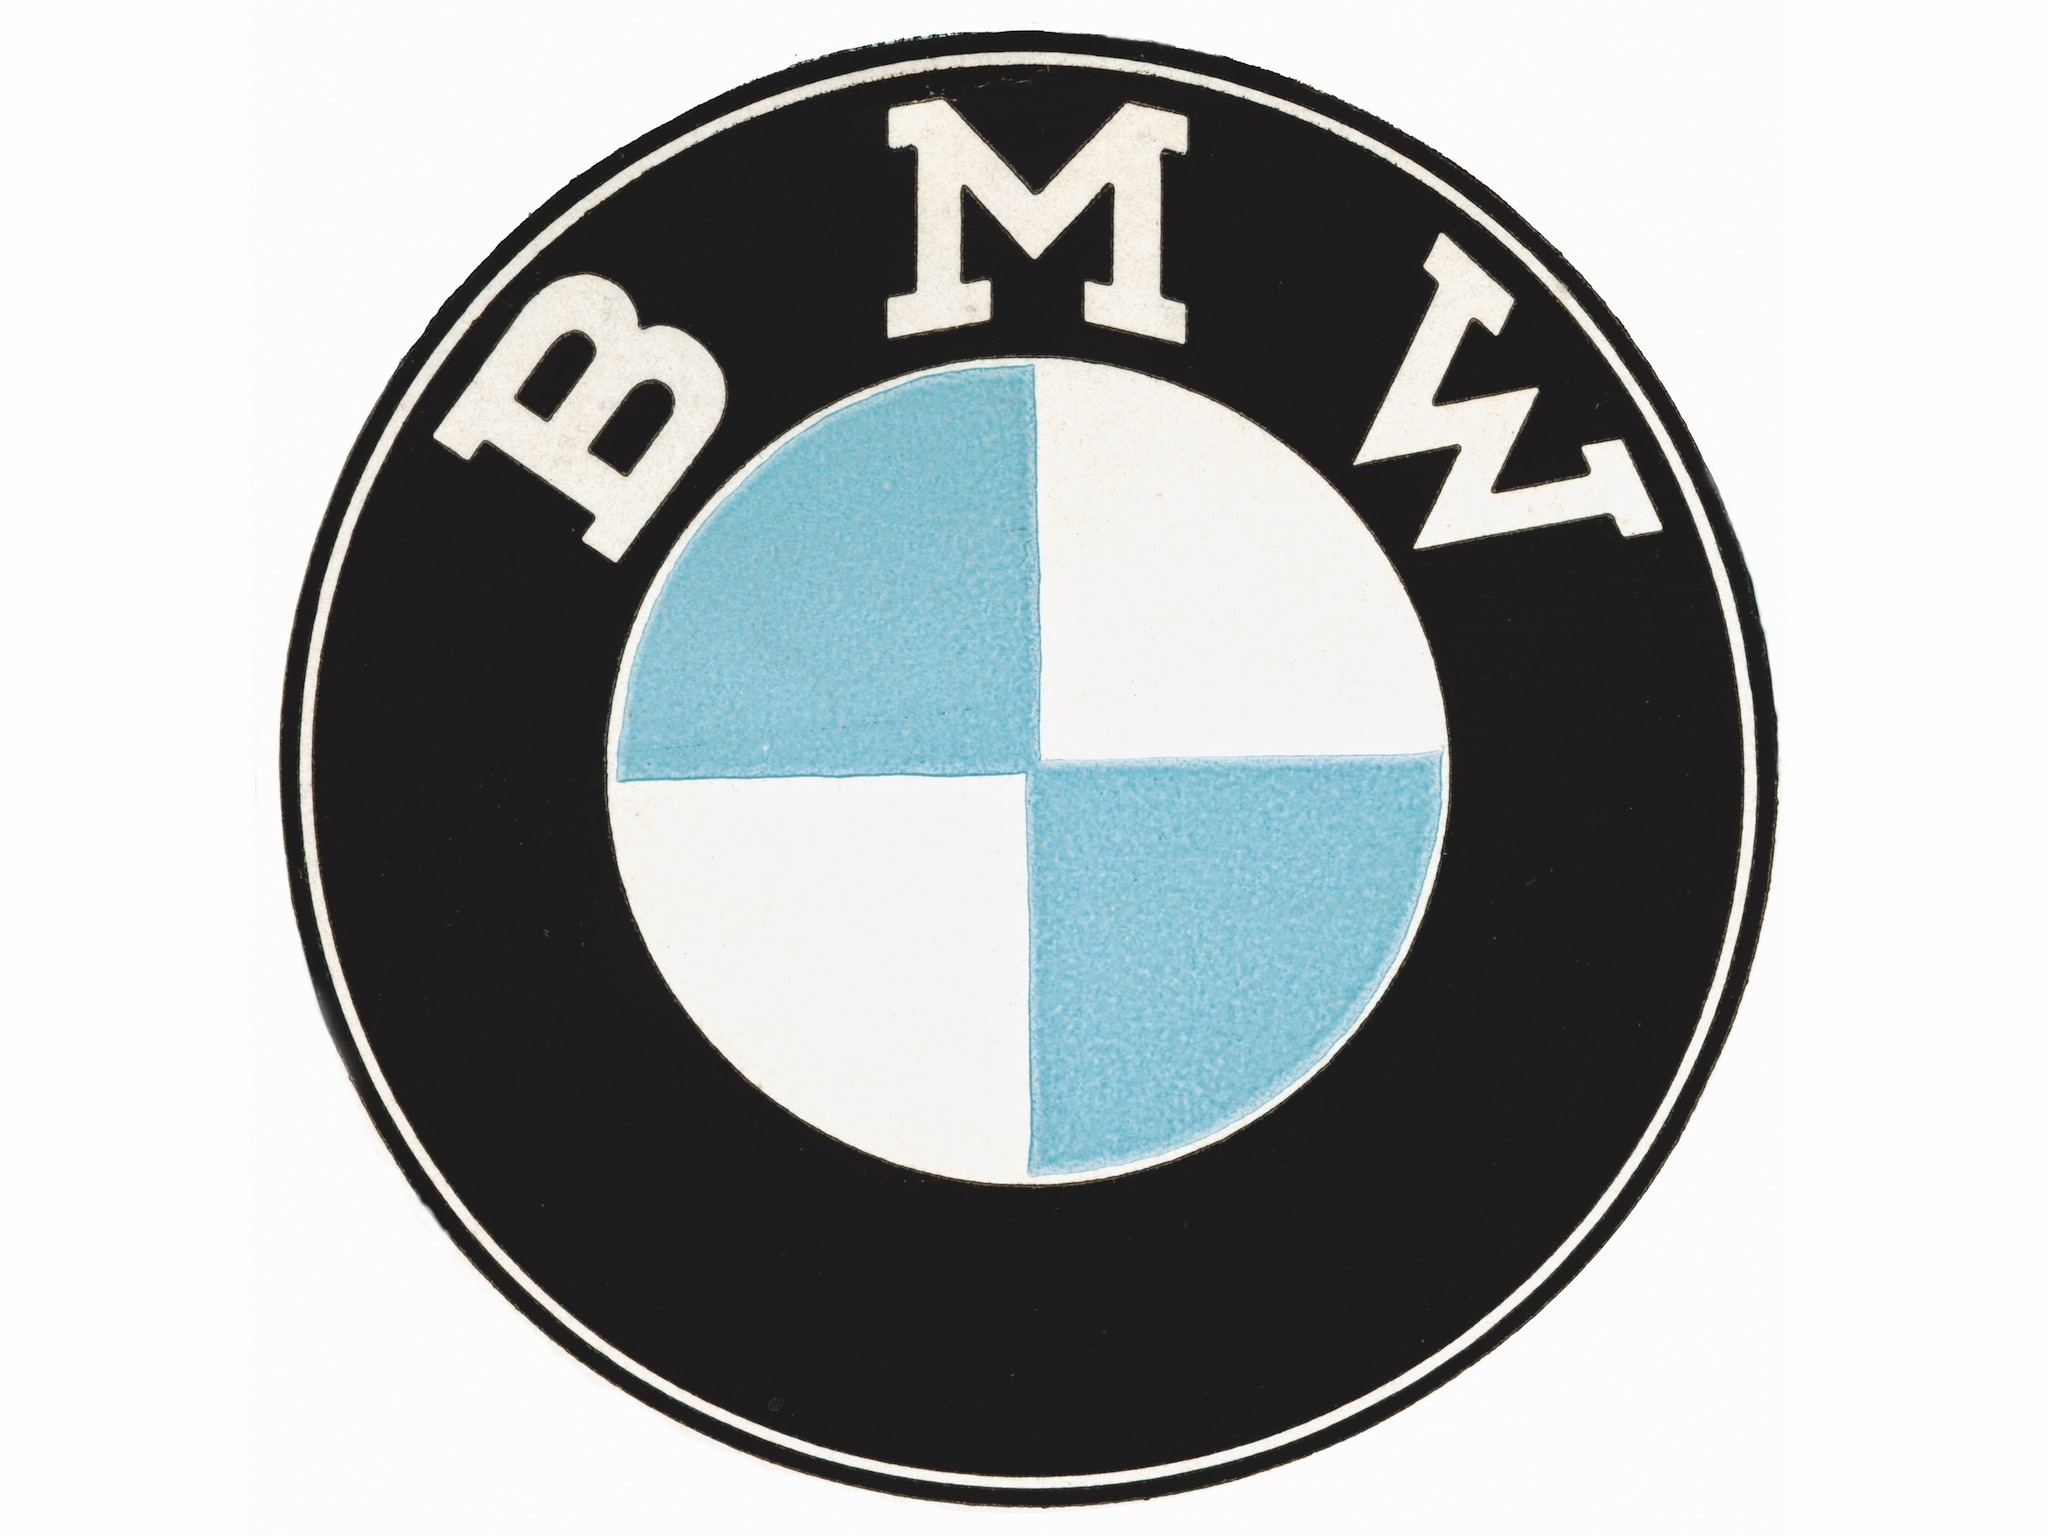 Bmwのロゴはプロペラではない とも言い切れない 5枚目の写真 画像 レスポンス Response Jp